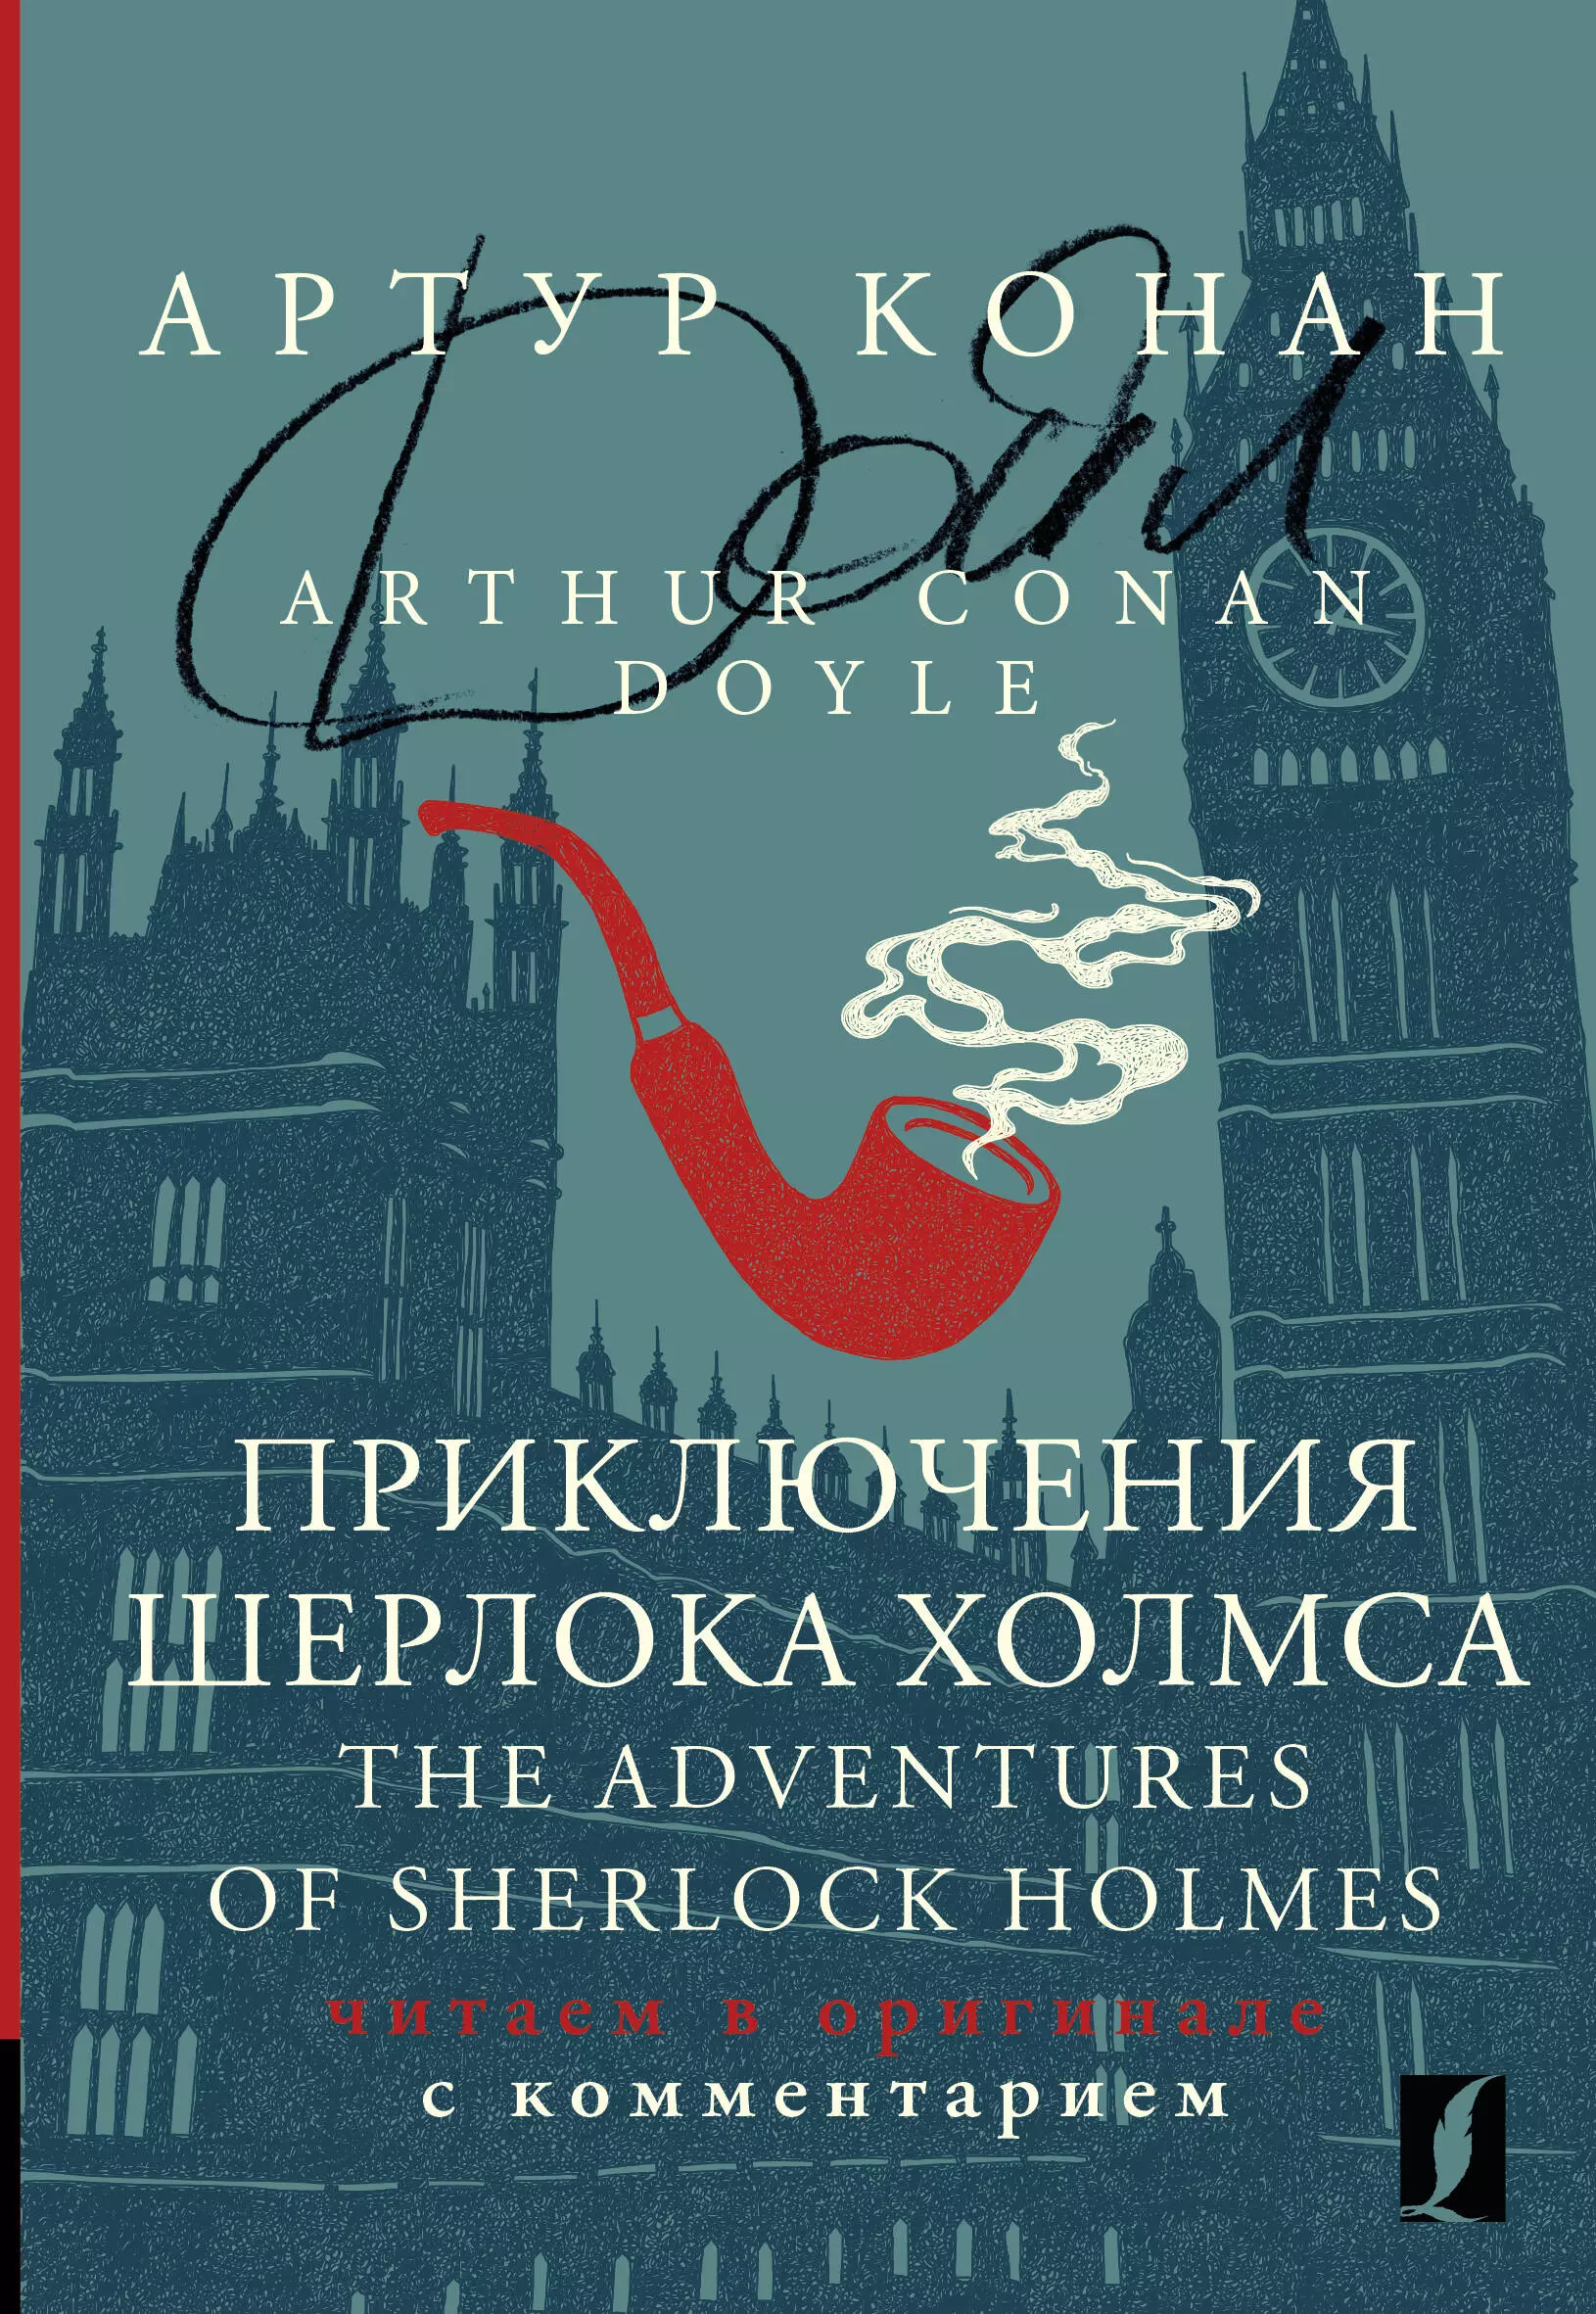 Дойл Артур Конан Приключения Шерлока Холмса / The Adventures of Sherlock Holmes: читаем в оригинале с комментарием дойл артур конан приключения шерлока холмса the adventures of sherlock holmes